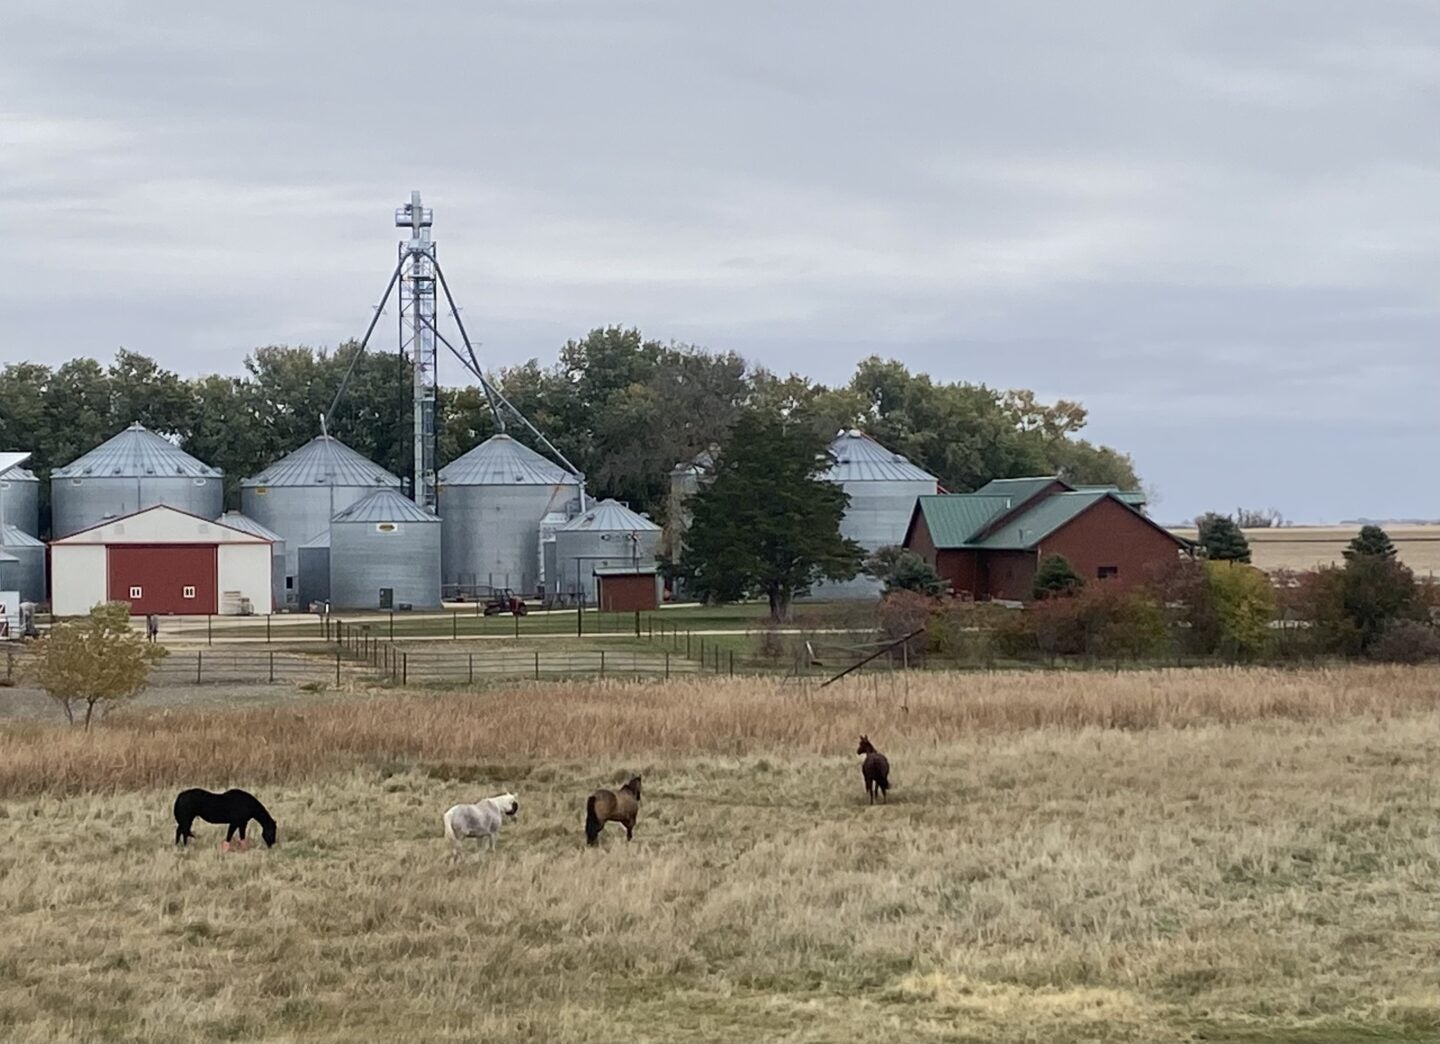 Image is of a south Dakota farm.